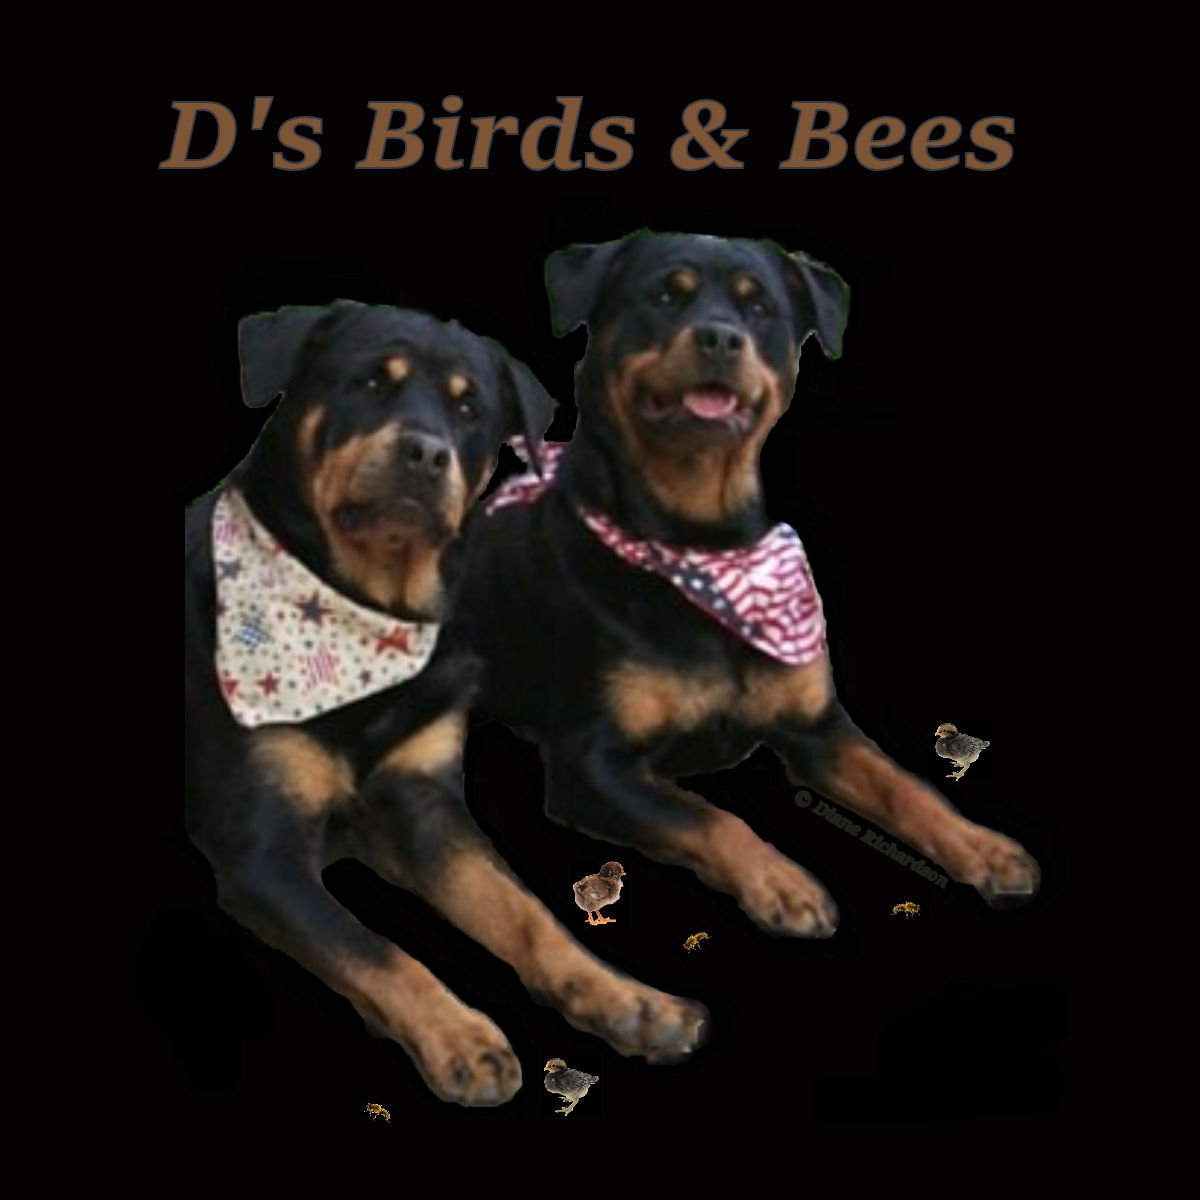 birdsandbees